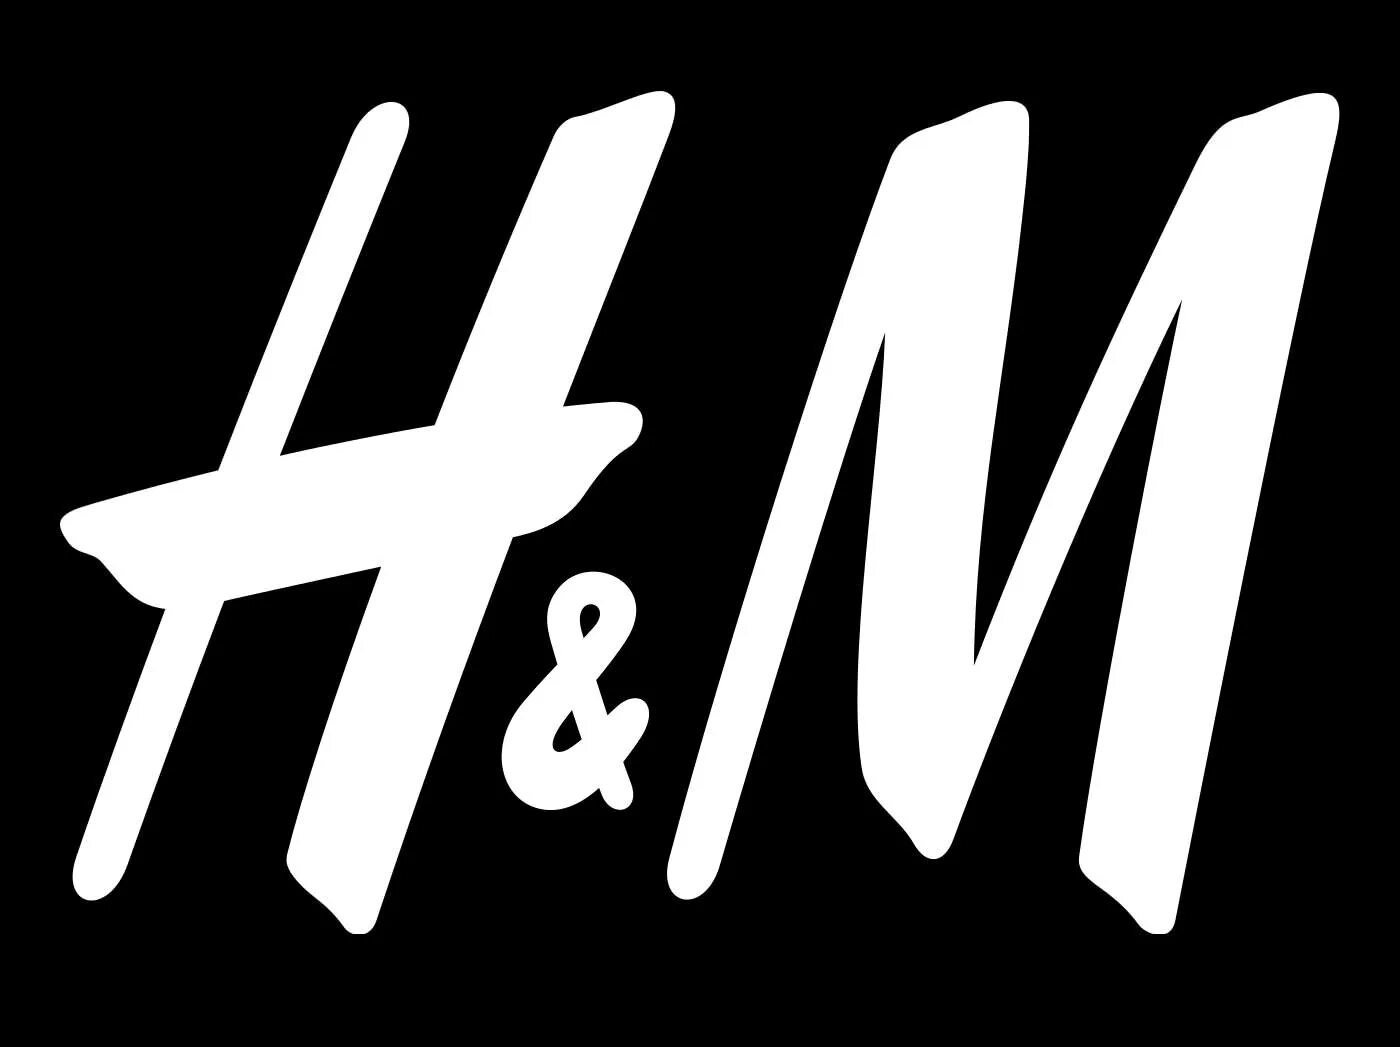 Https m com h. H&M значок. НМ логотип. Наклейка h&m. Логотип HM на одежде.